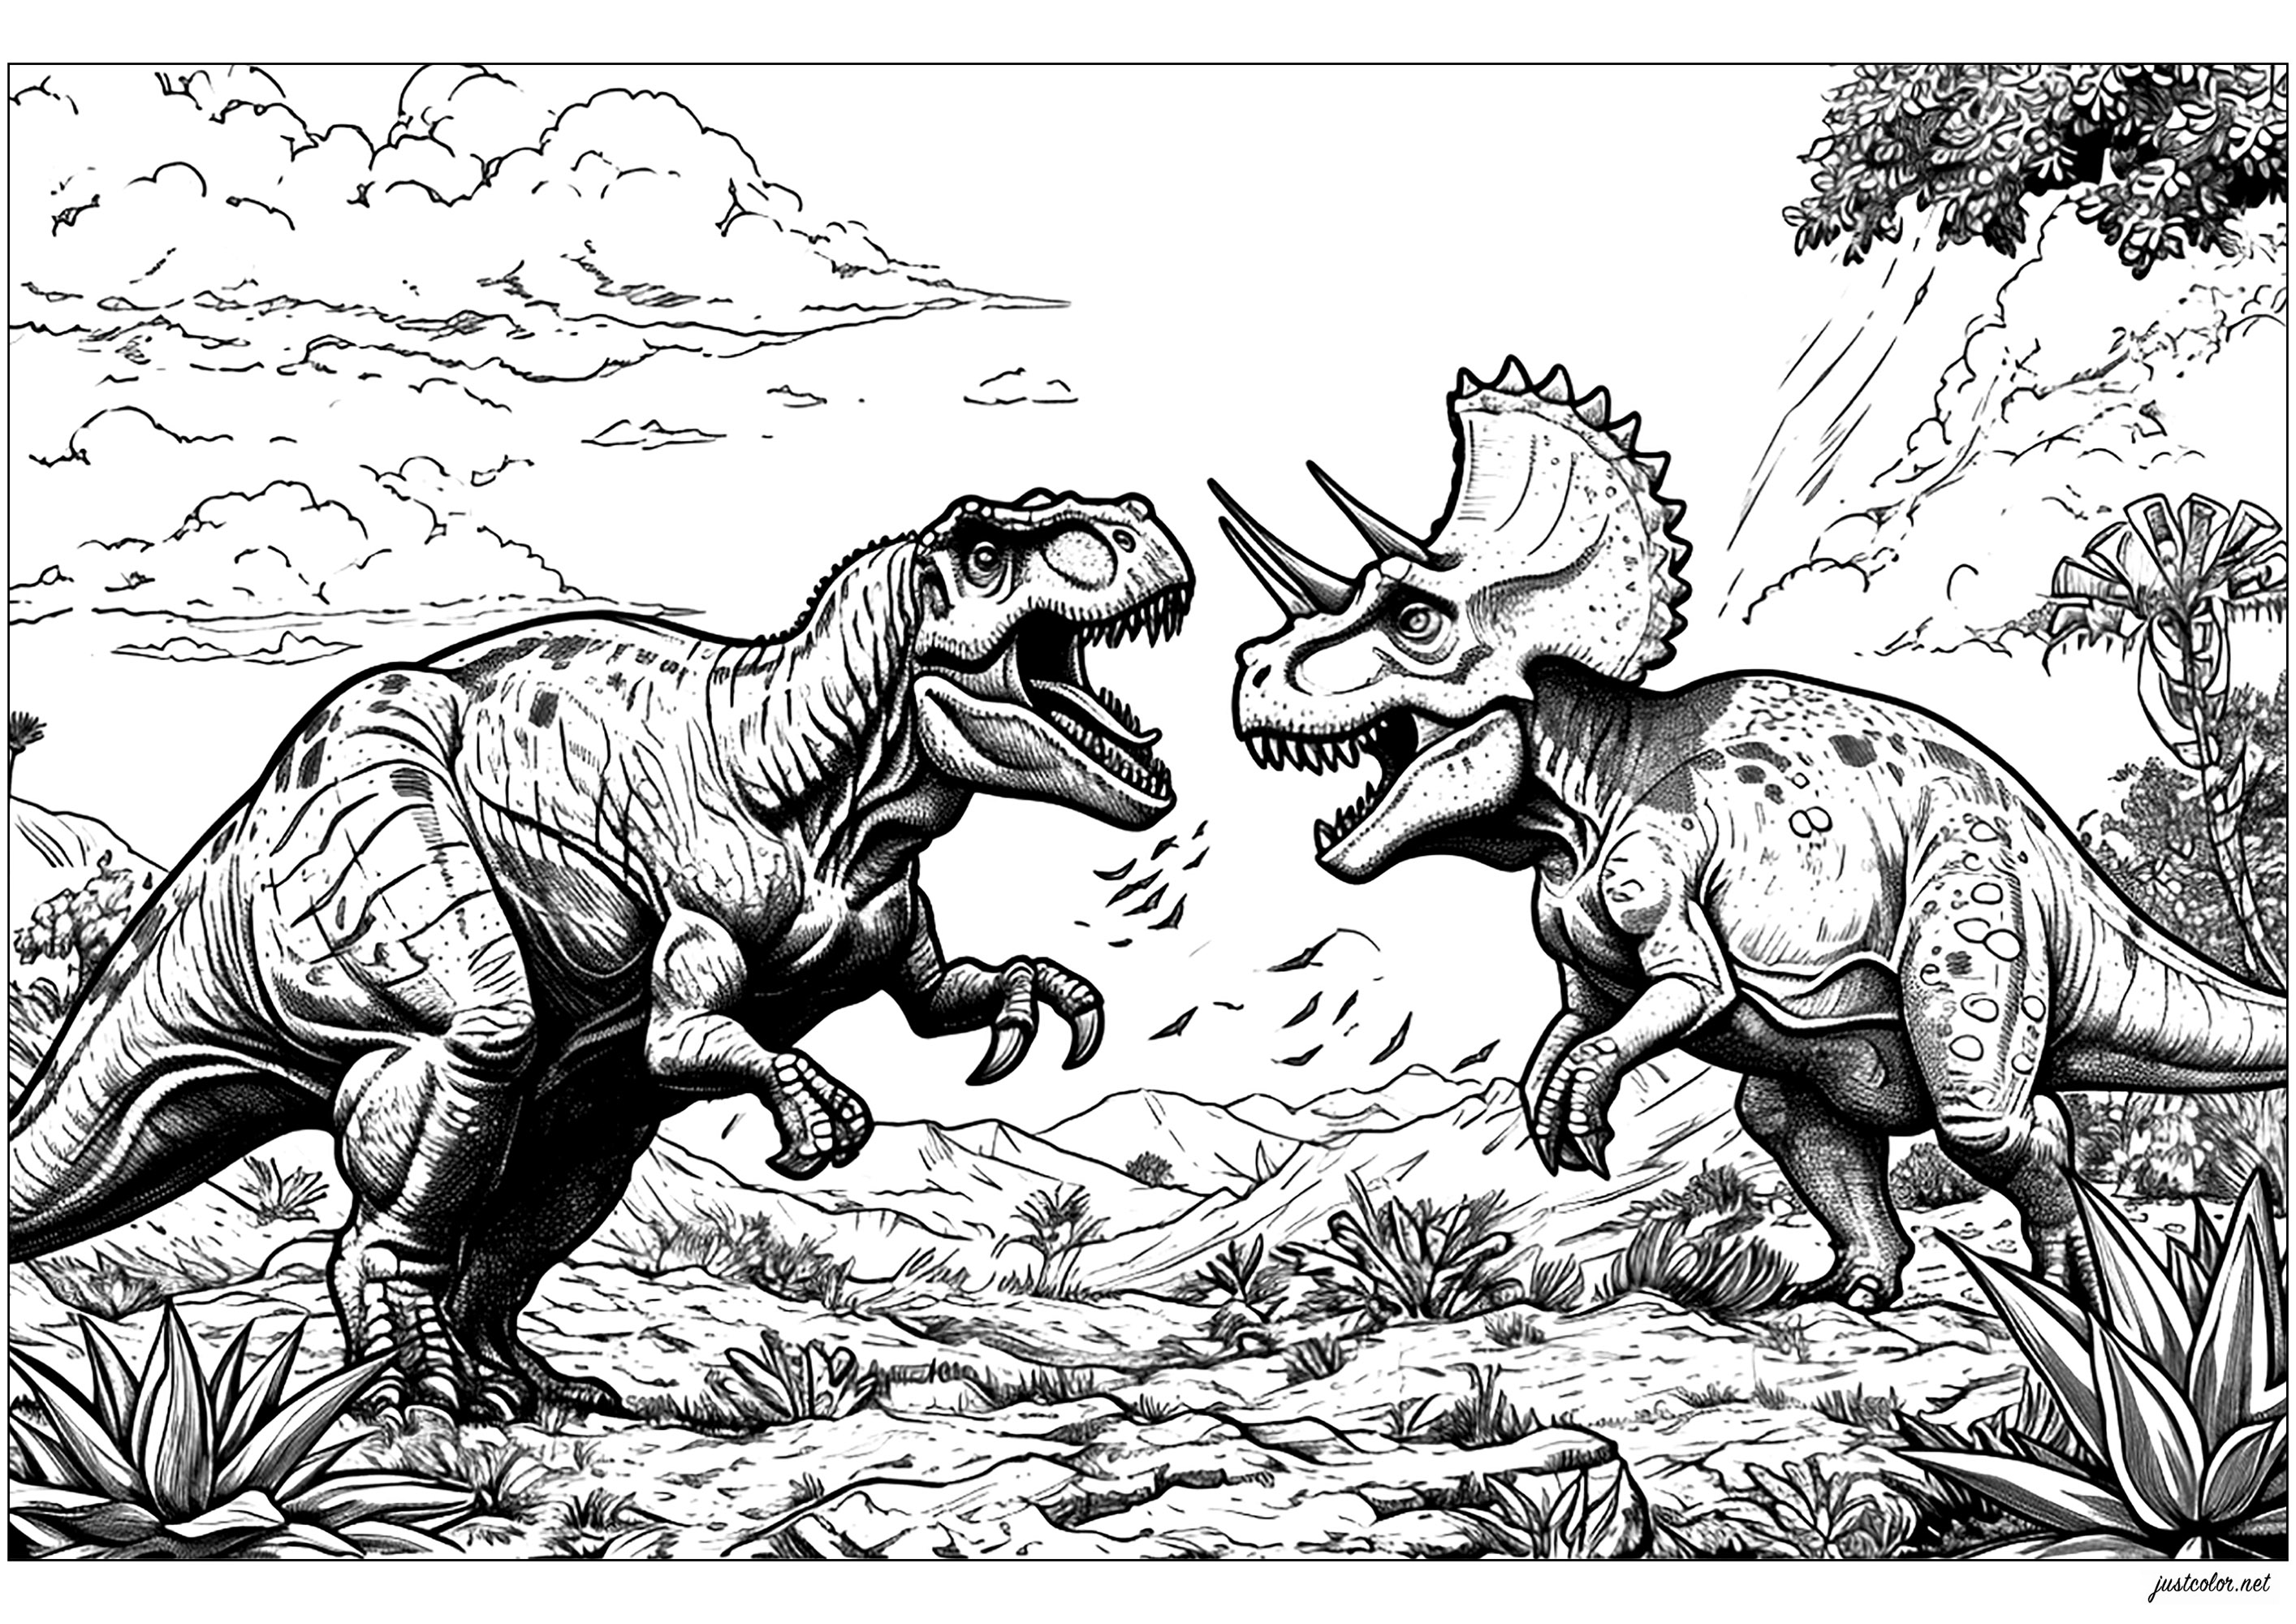 Battle between two dinosaurs: Tyrannosaurus and Triceraptos